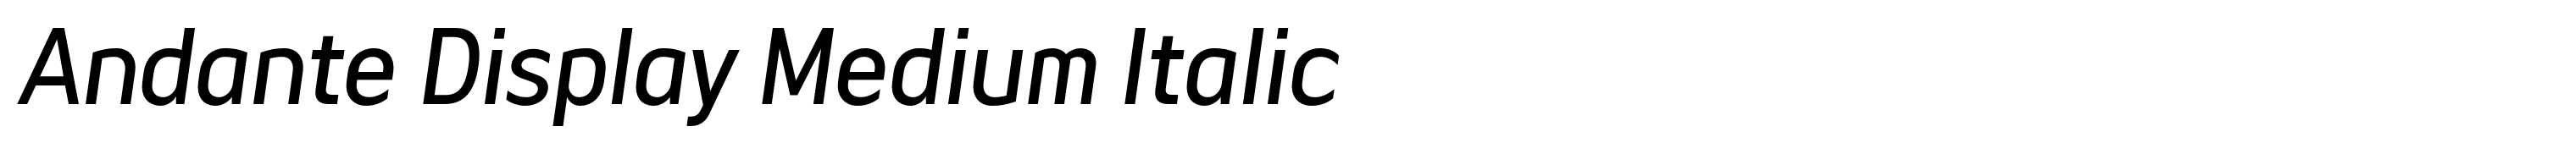 Andante Display Medium Italic